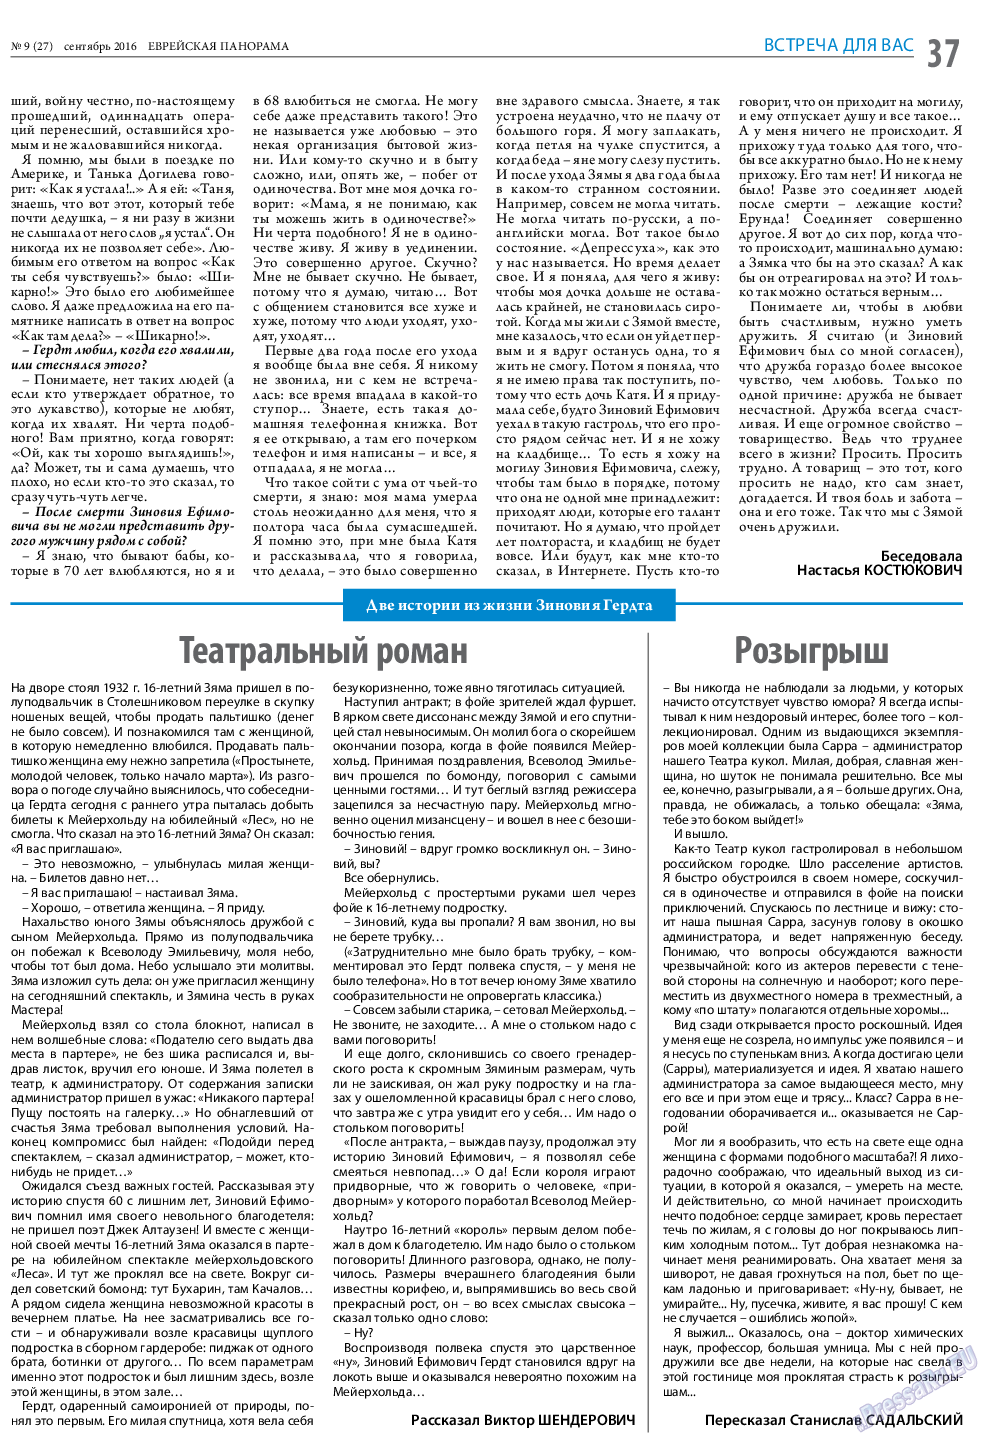 Еврейская панорама, газета. 2016 №9 стр.37